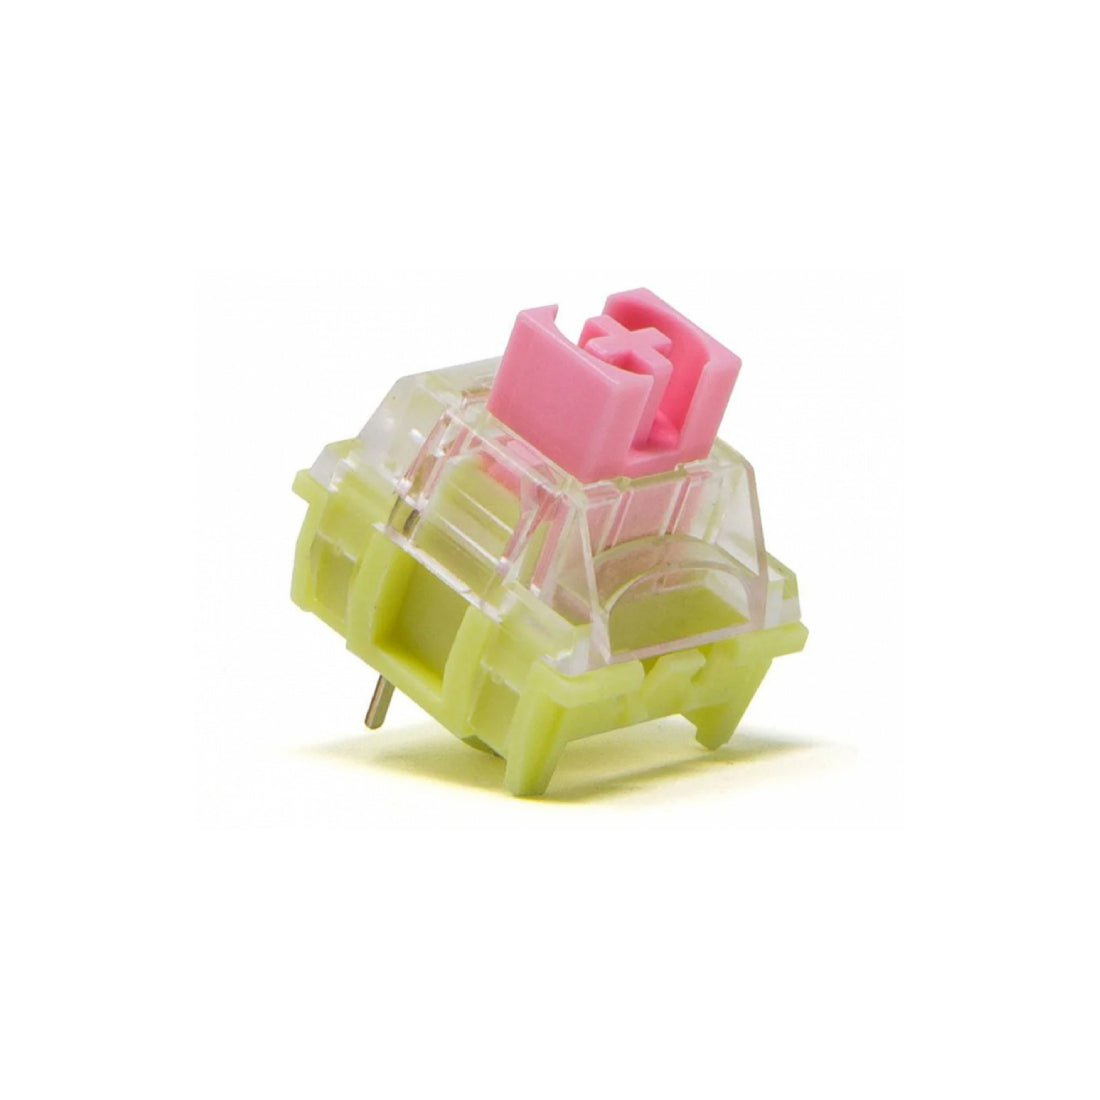 Ducky Switch Kit - TTC Gold Pink - مكبس لوحة مفاتيح - Store 974 | ستور ٩٧٤